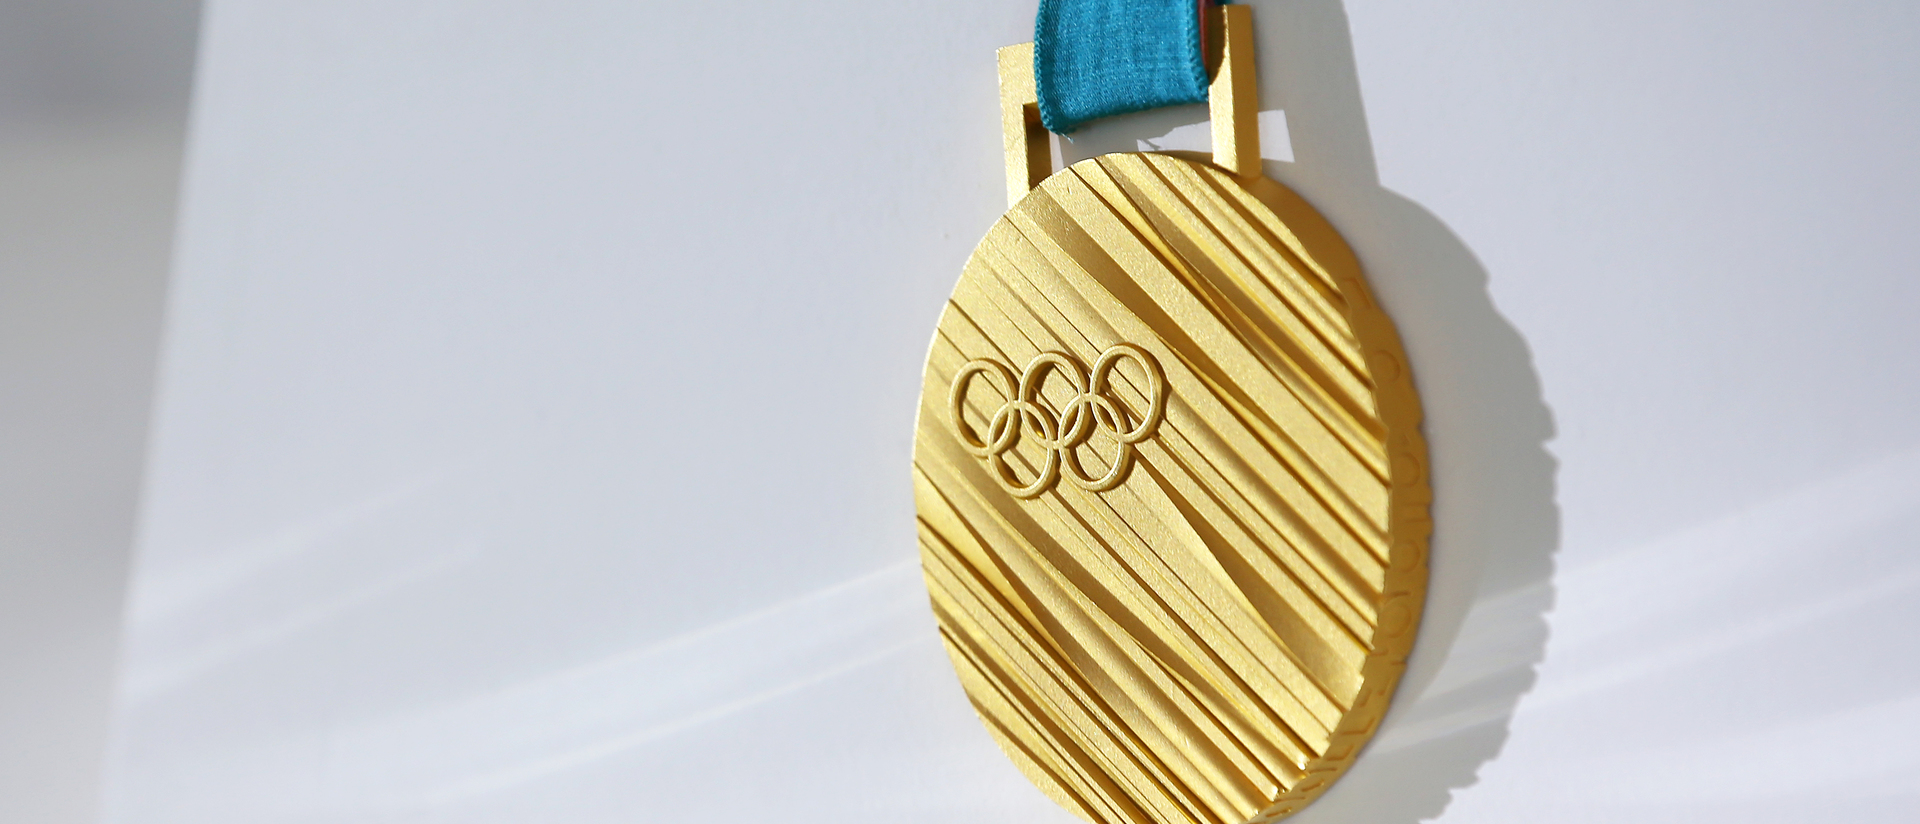 PyeongChang 2018 Olympic Medal